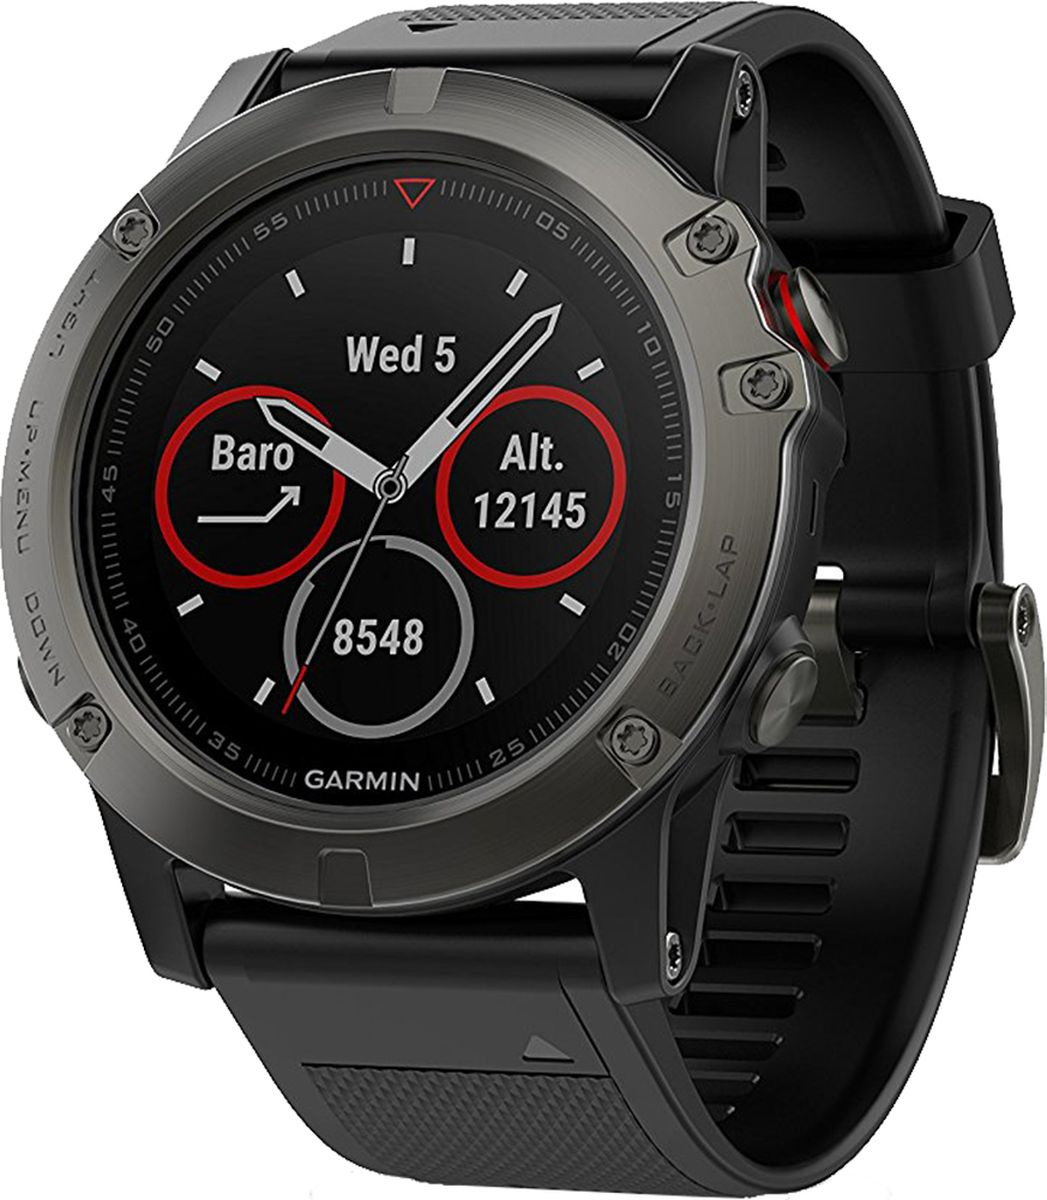 Спортивные часы Garmin Часы спортивные Garmin "Fenix 5X Sapphire", цвет: серый. 010-01733-01, цвет серый #1